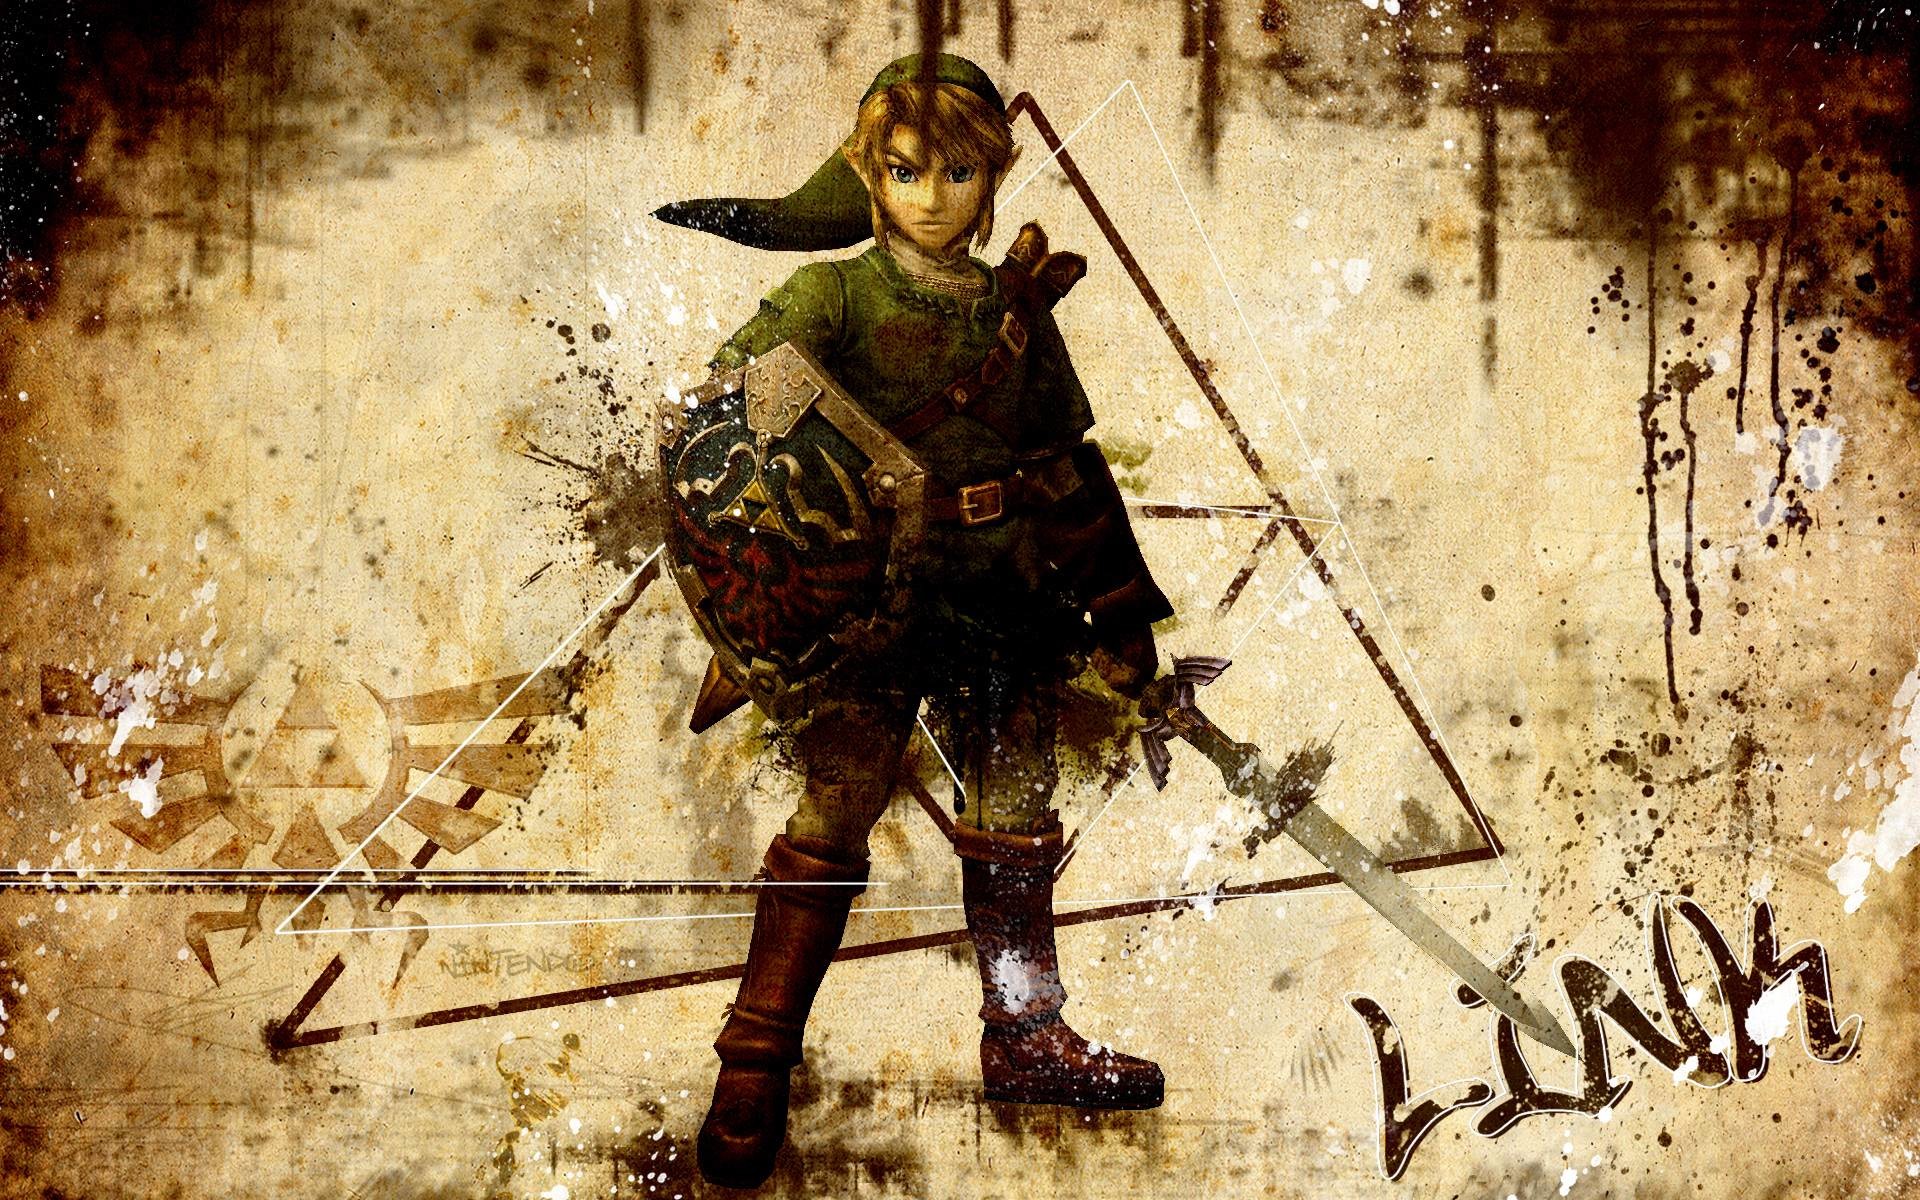 Link – The Legend of Zelda Wallpaper 2833139 – Fanpop